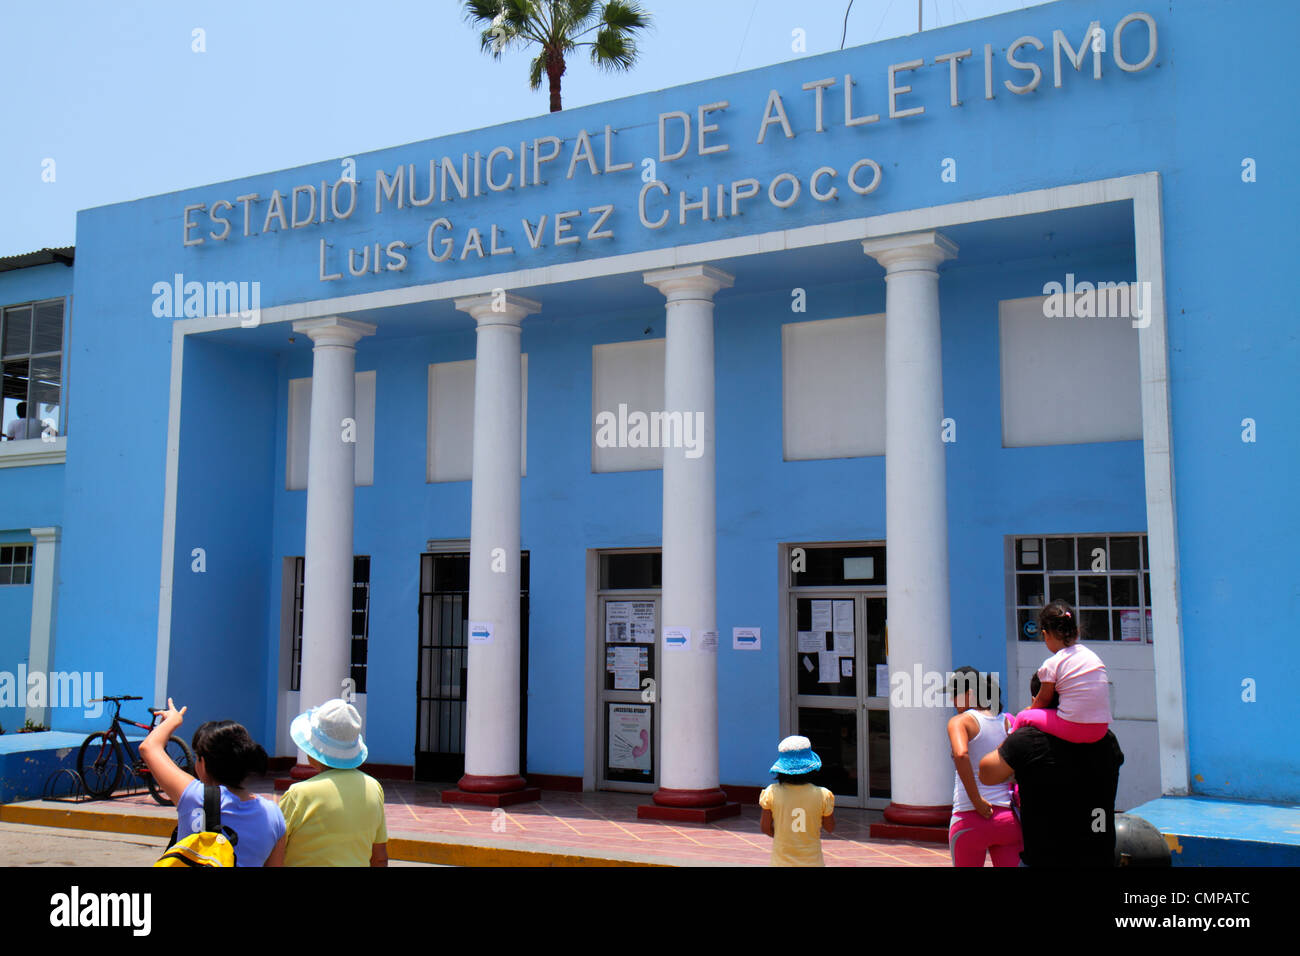 Lima Peru,Barranco,Avenida Miguel Grau,Estadio Municipal,community sports complex,athletic center,centre,Hispanic ethnic man men male,woman female wom Stock Photo